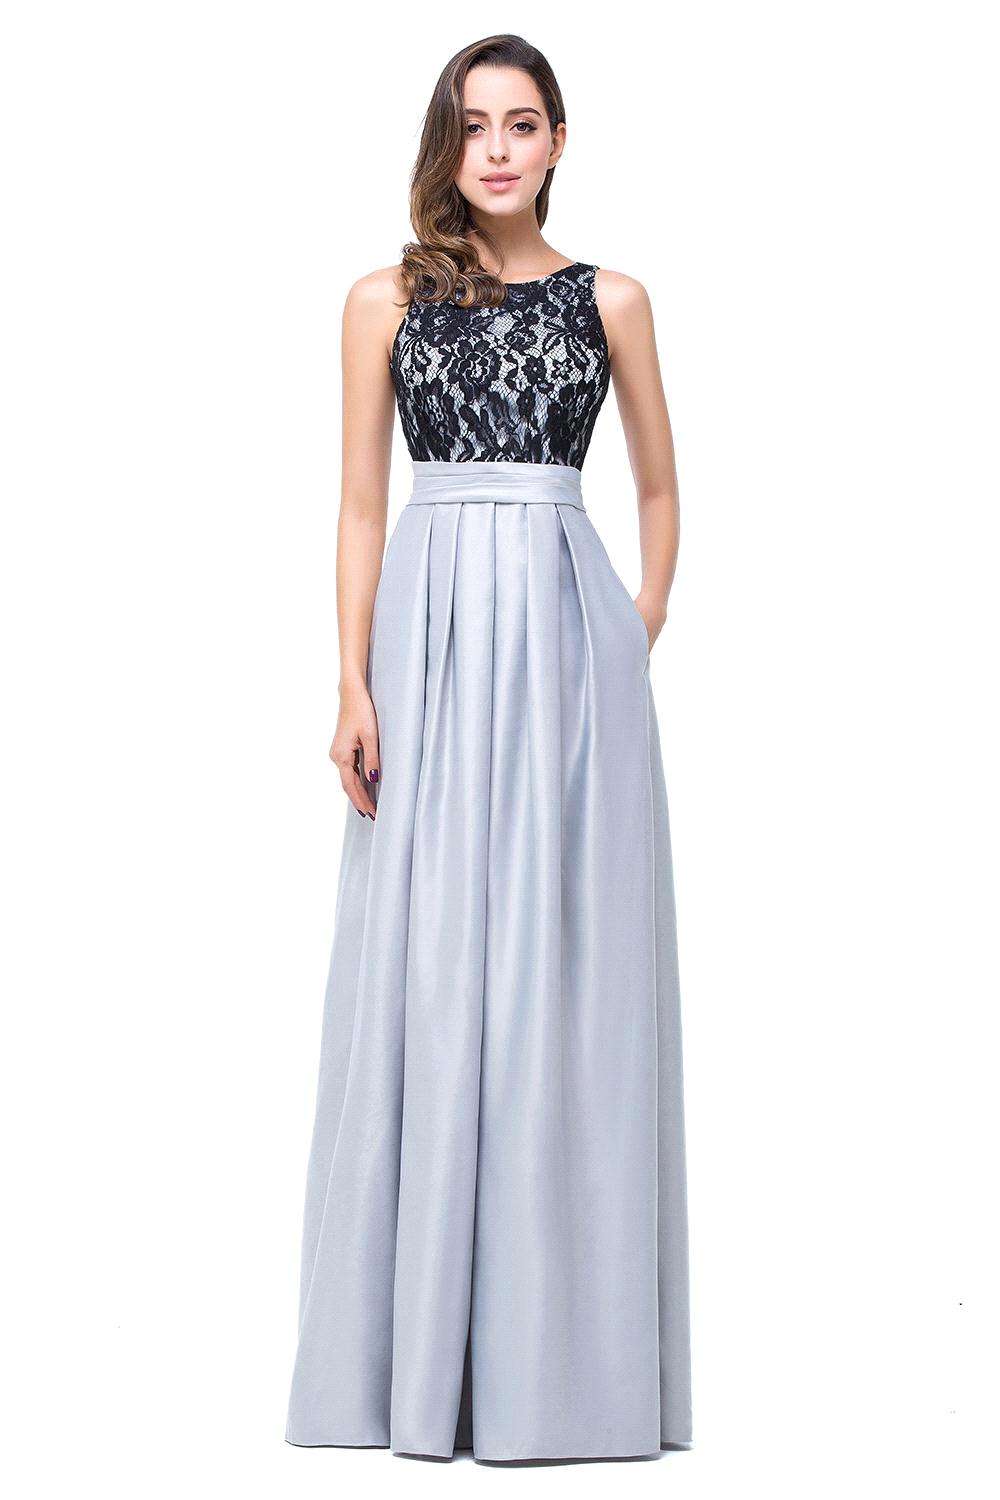 Short black and silver bridesmaid dresses